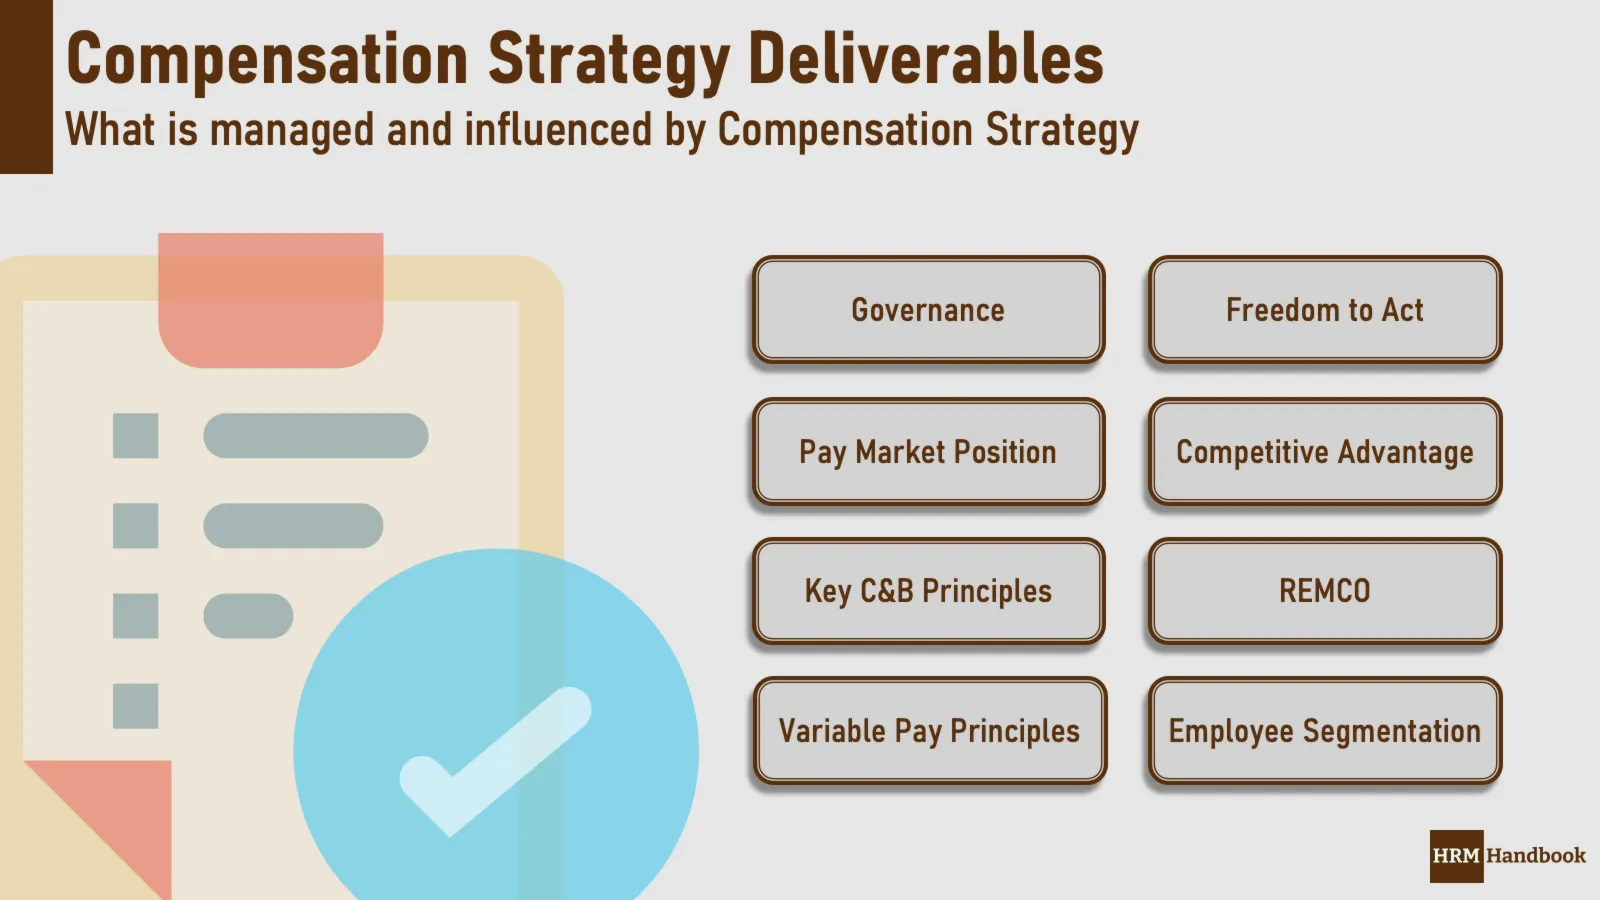 Key Compensation Strategy Deliverables